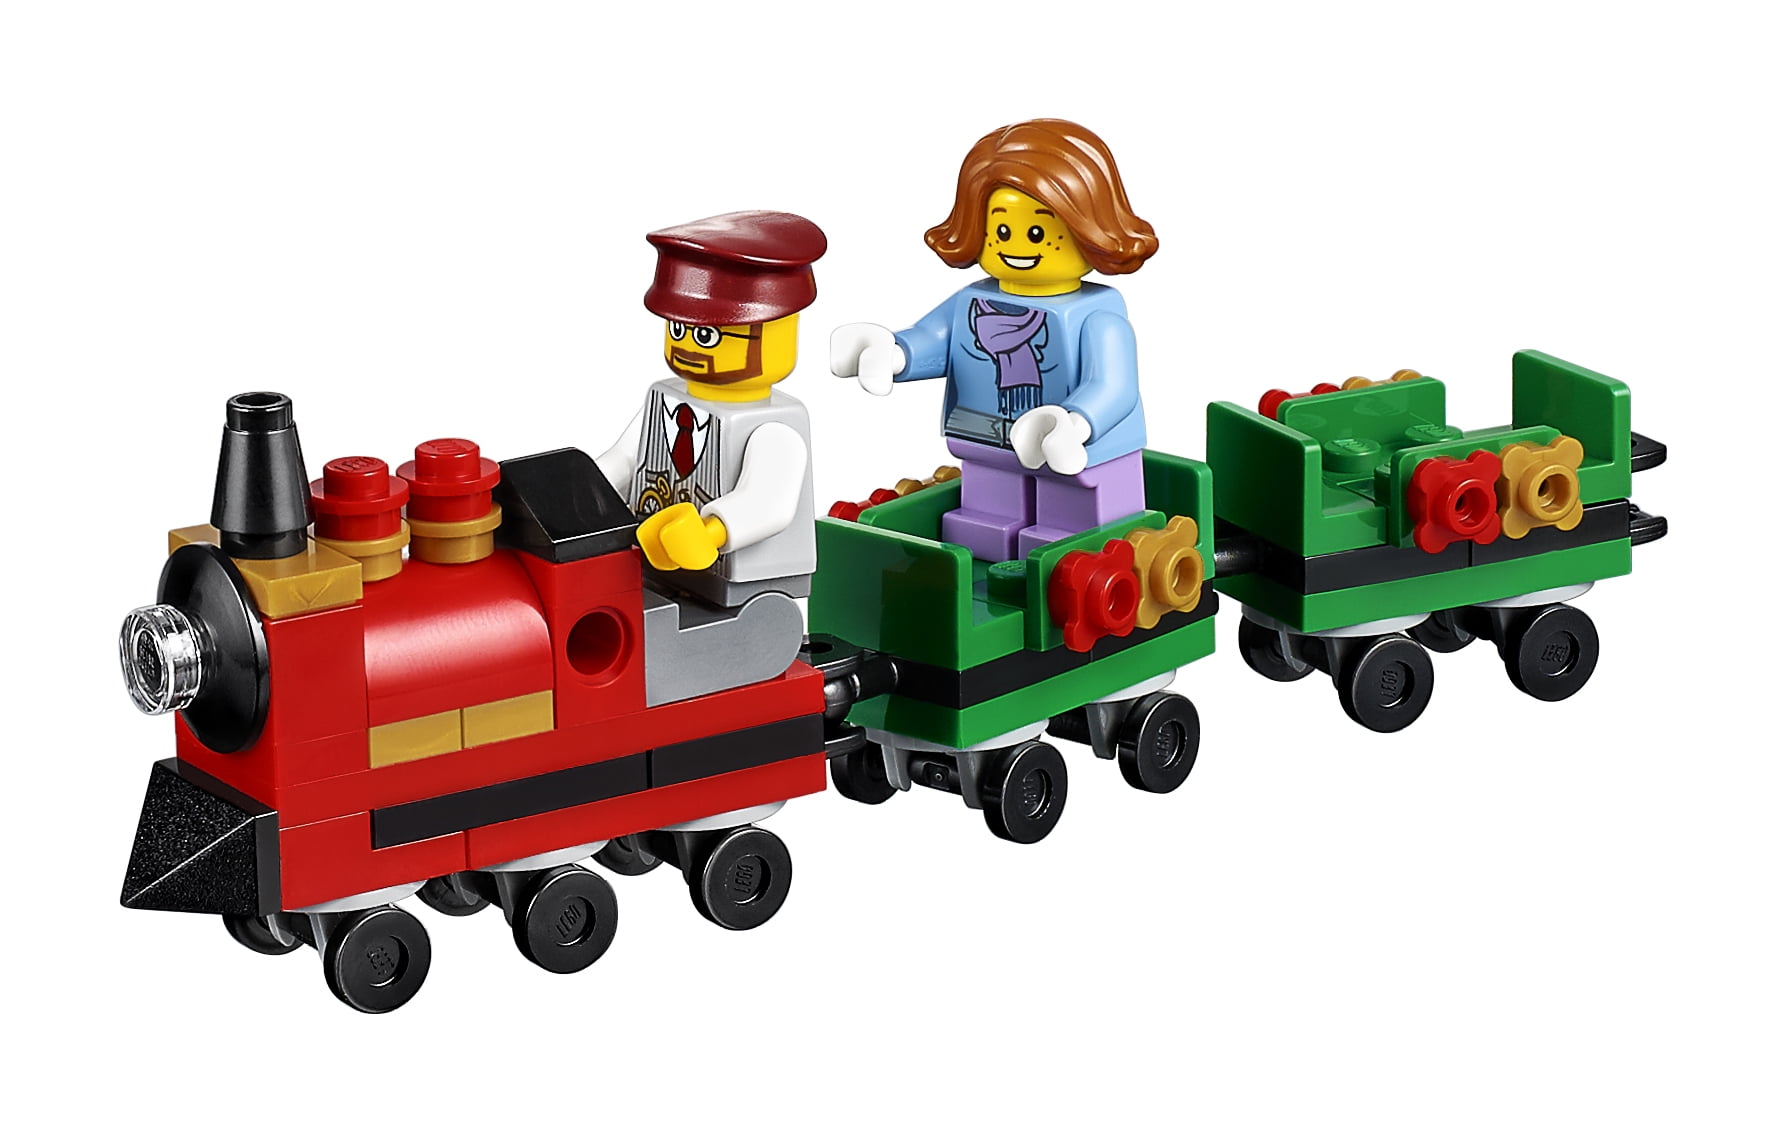 LEGO Duplo 10882 Eisenbahn Schienen Train Tracks Les rails du train N9/18 